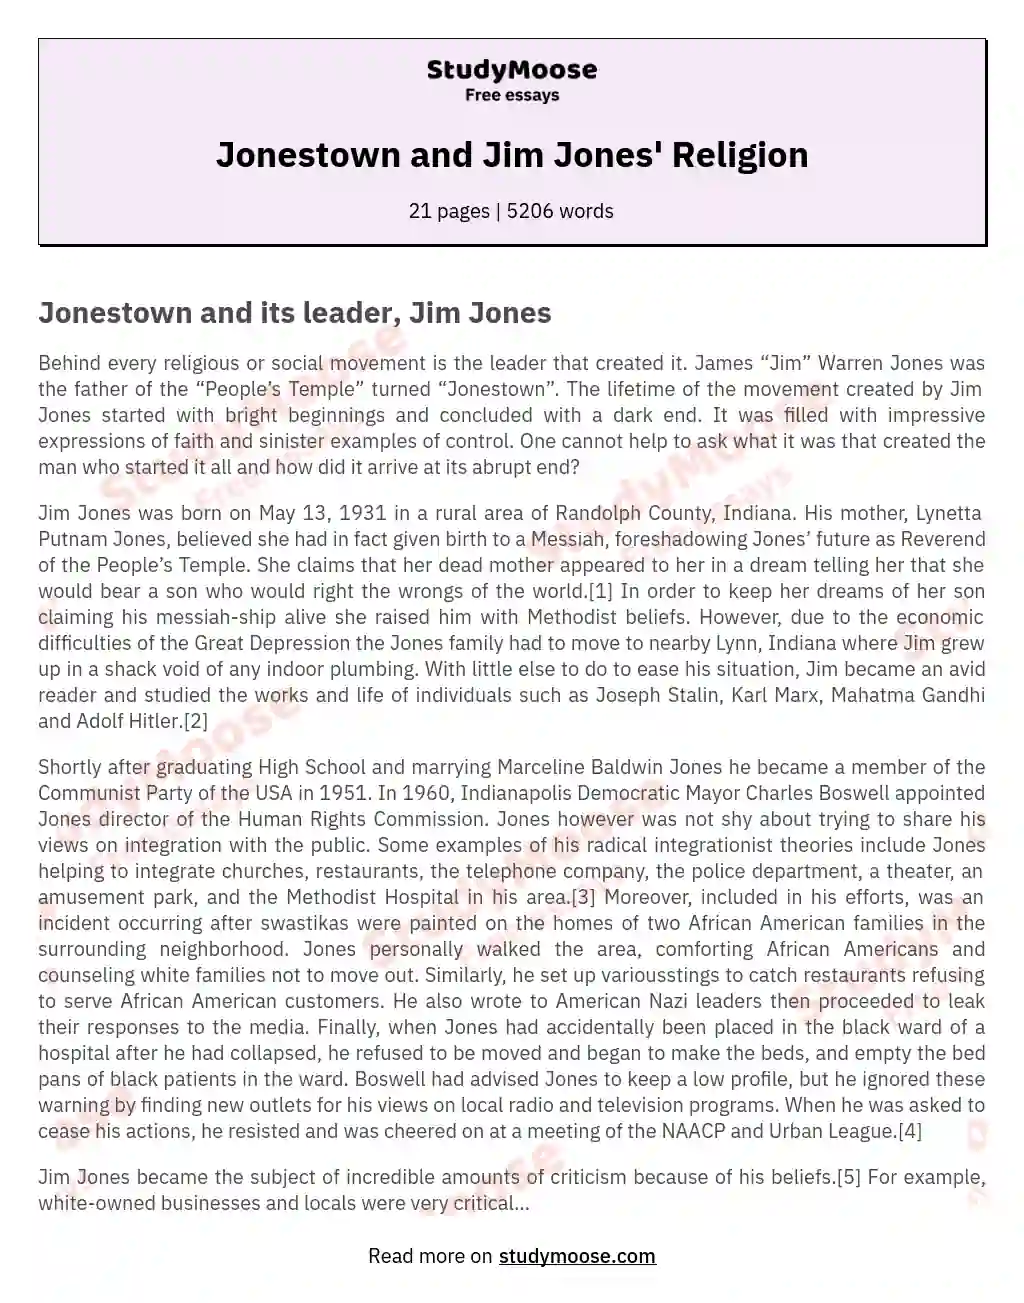 Jonestown and Jim Jones' Religion